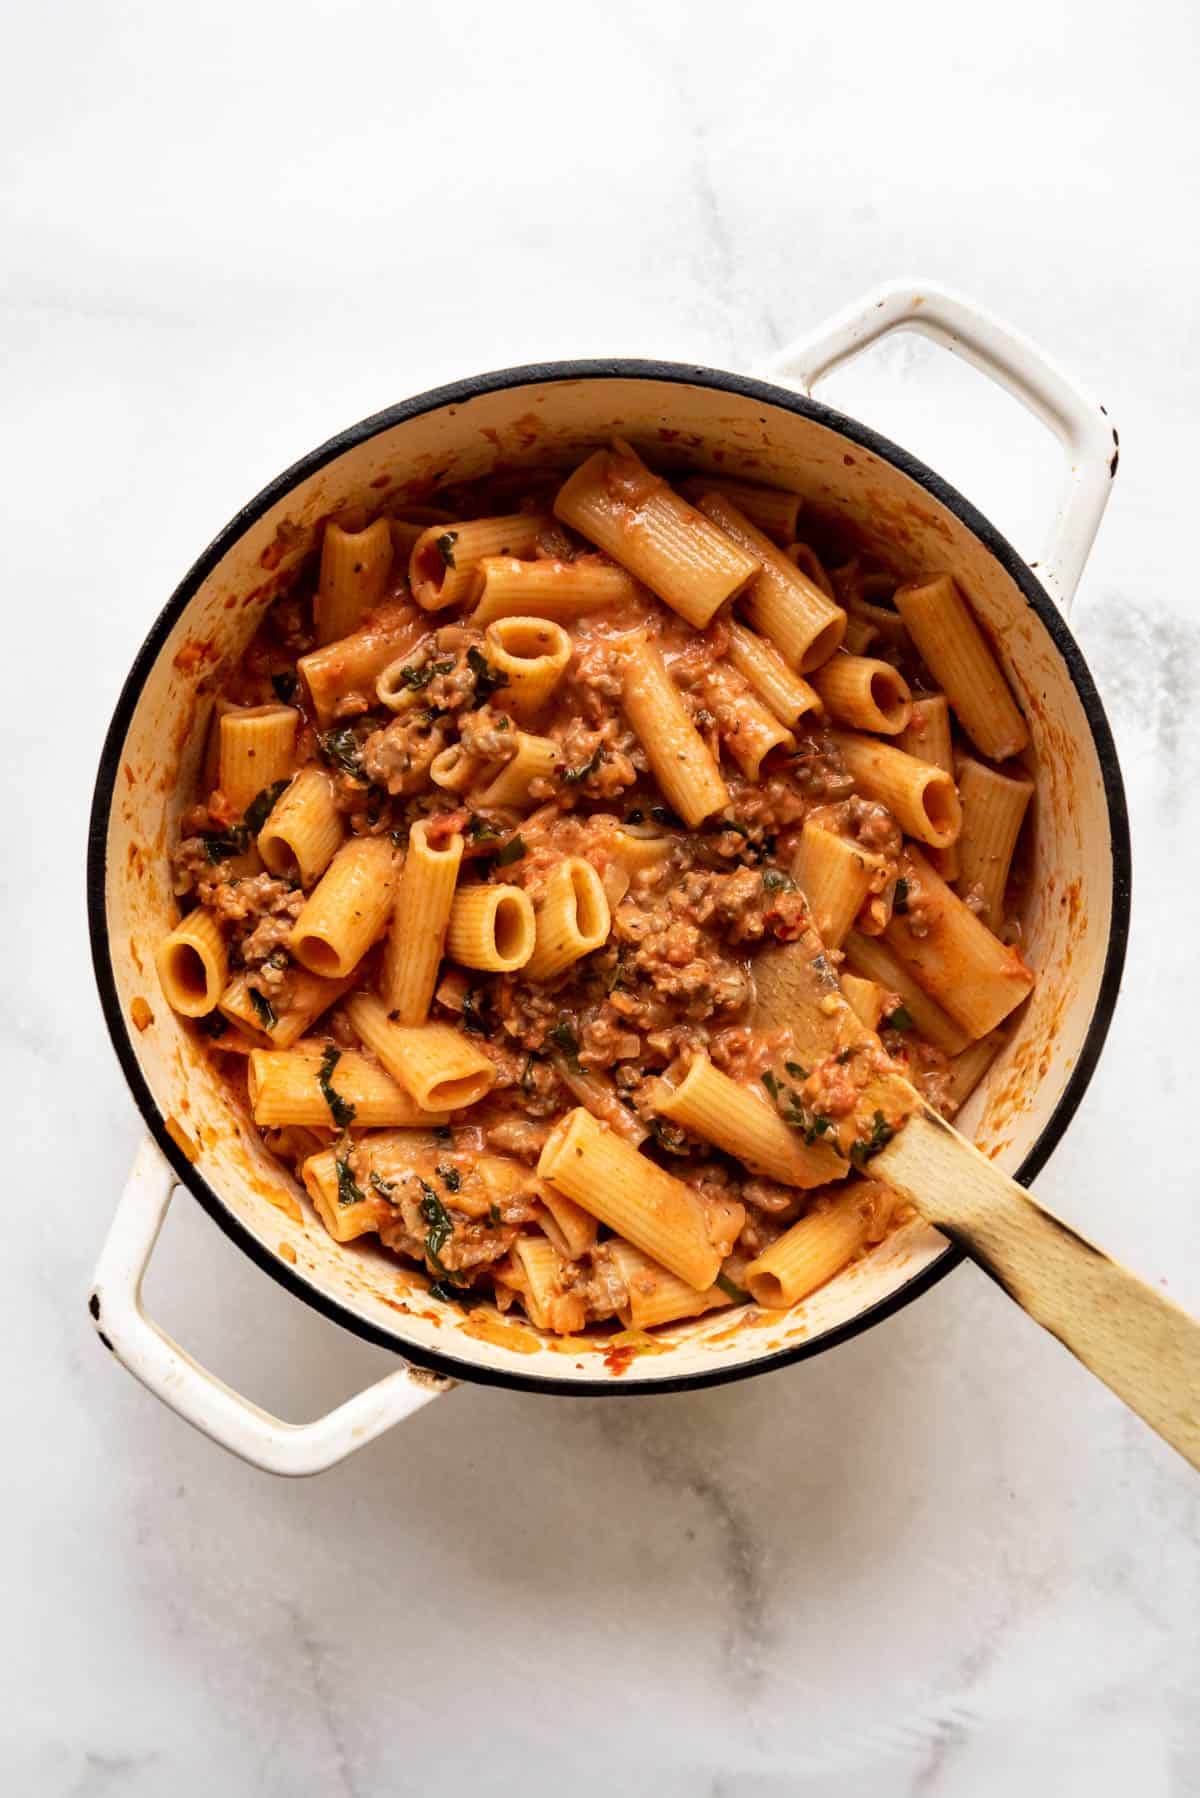 Stirring cooked rigatoni pasta into a thick and meaty Italian sausage marinara sauce.